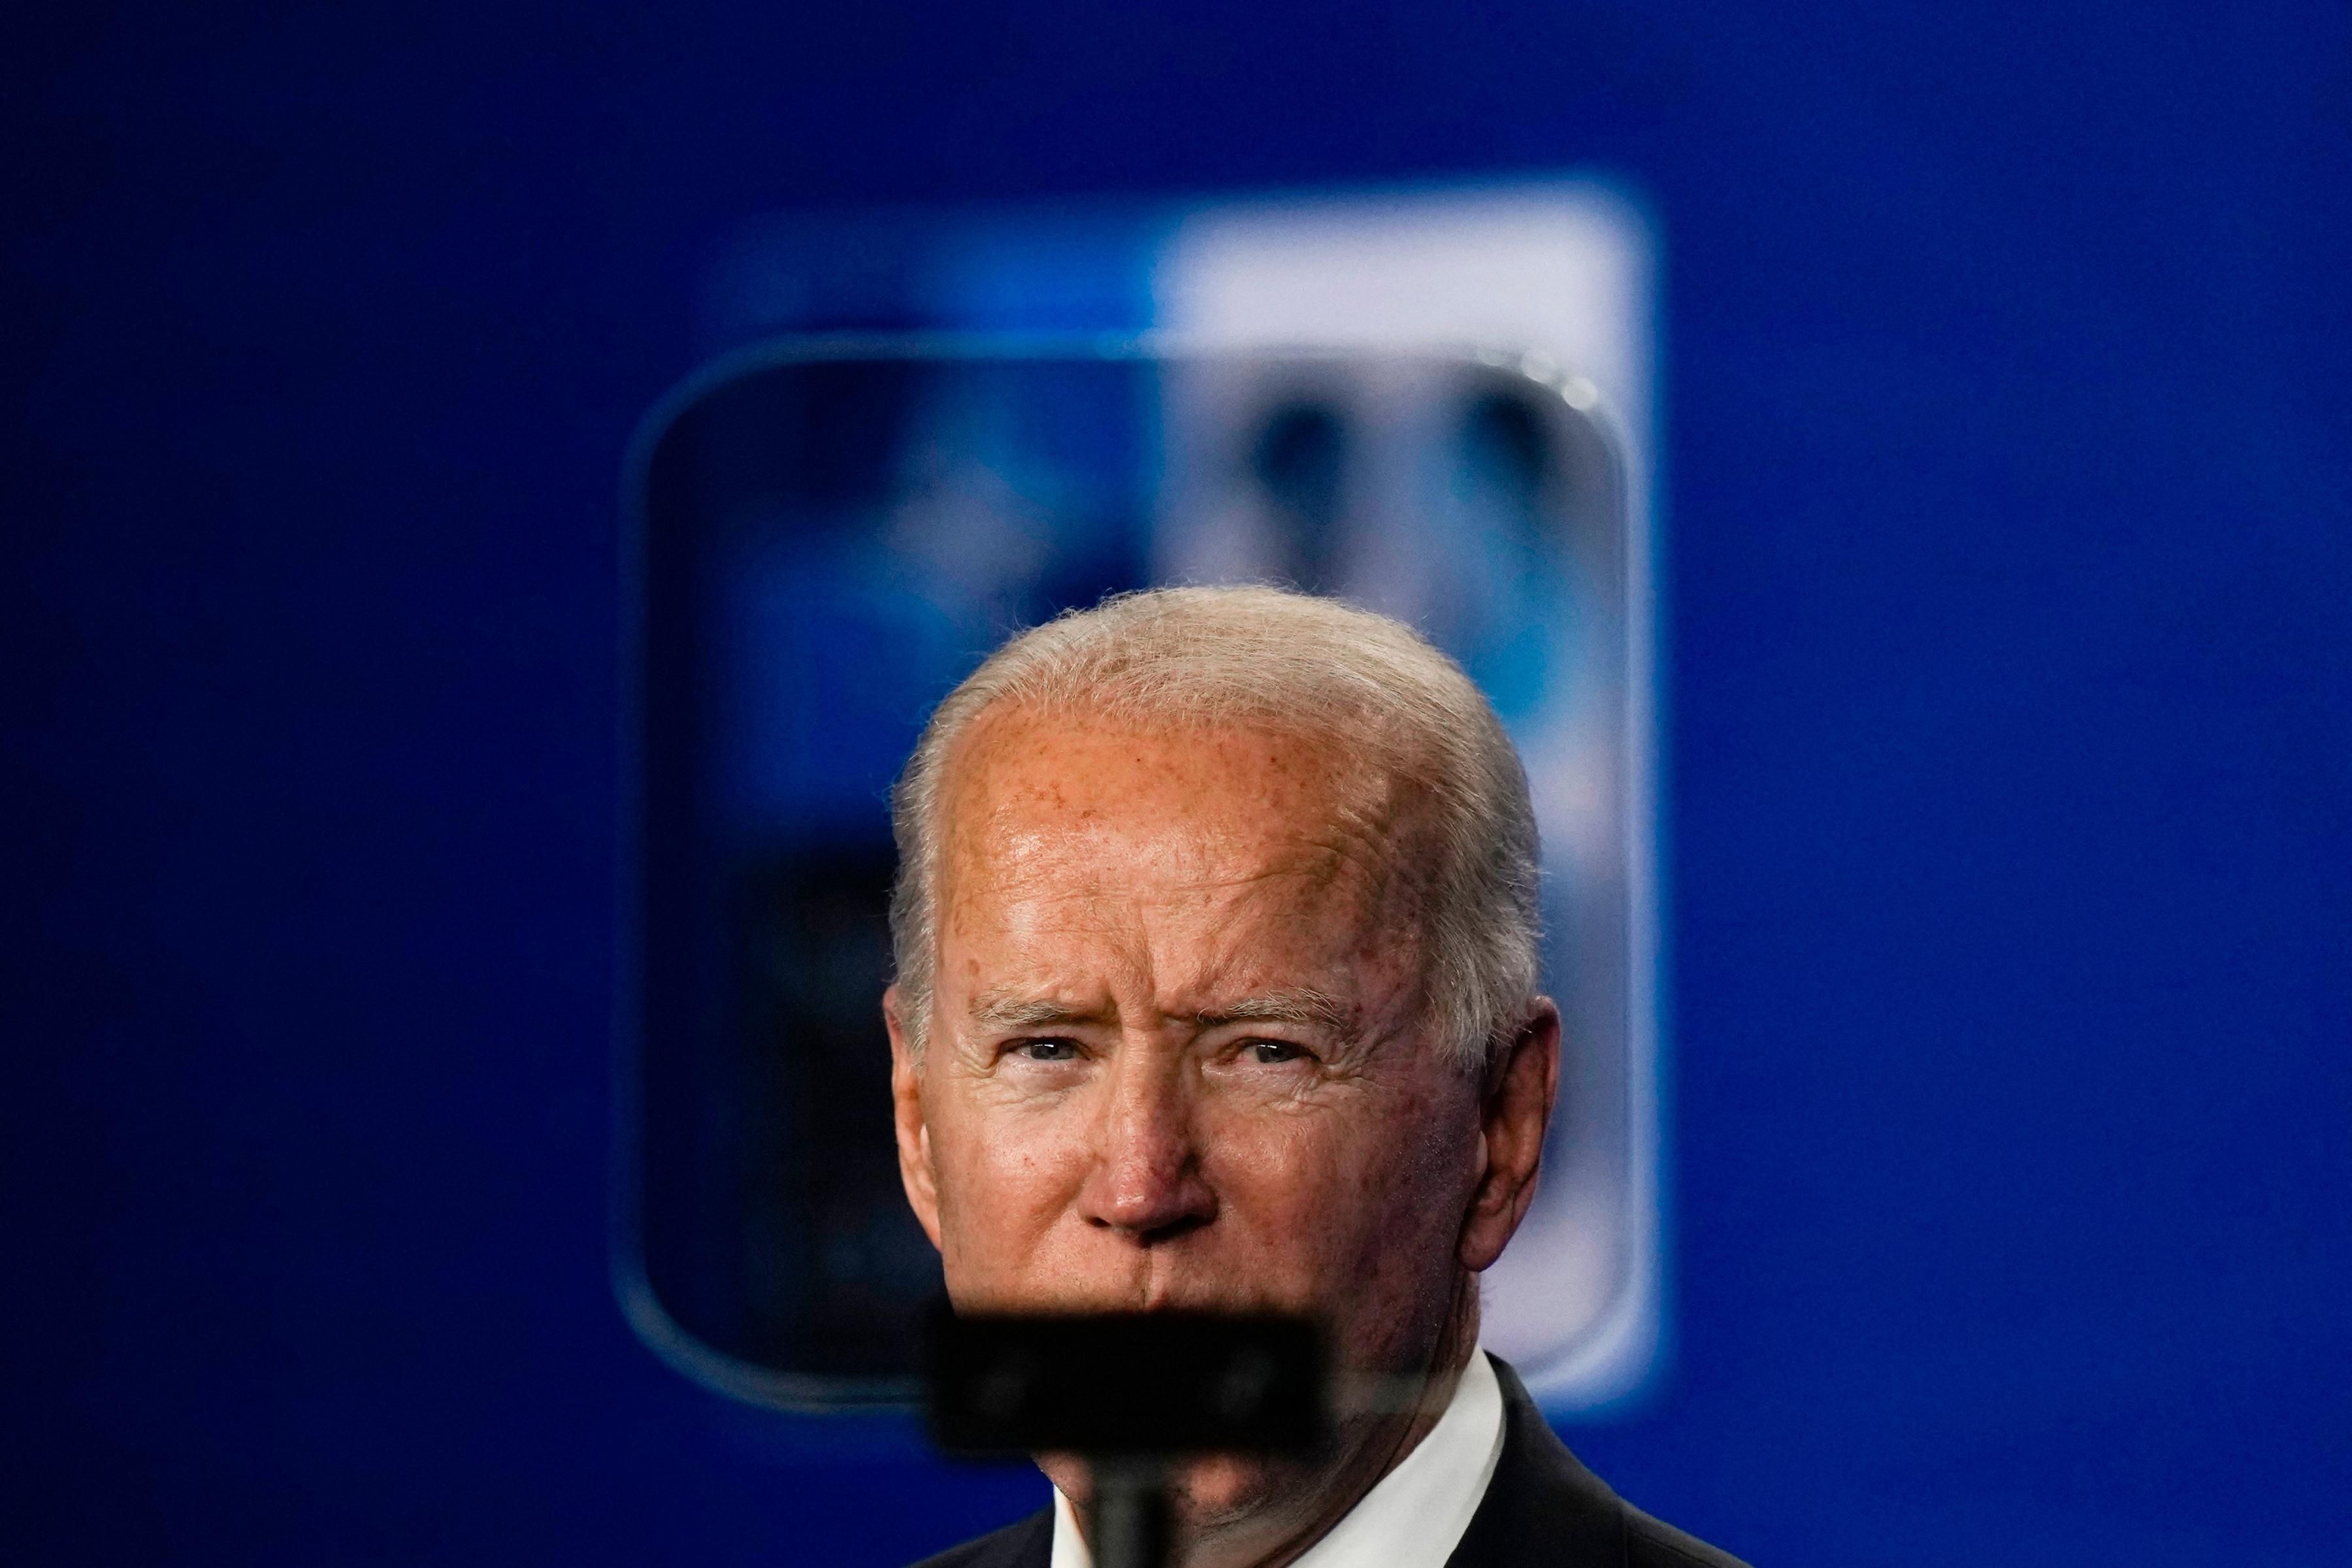 President Joe Biden speaks at a press conference